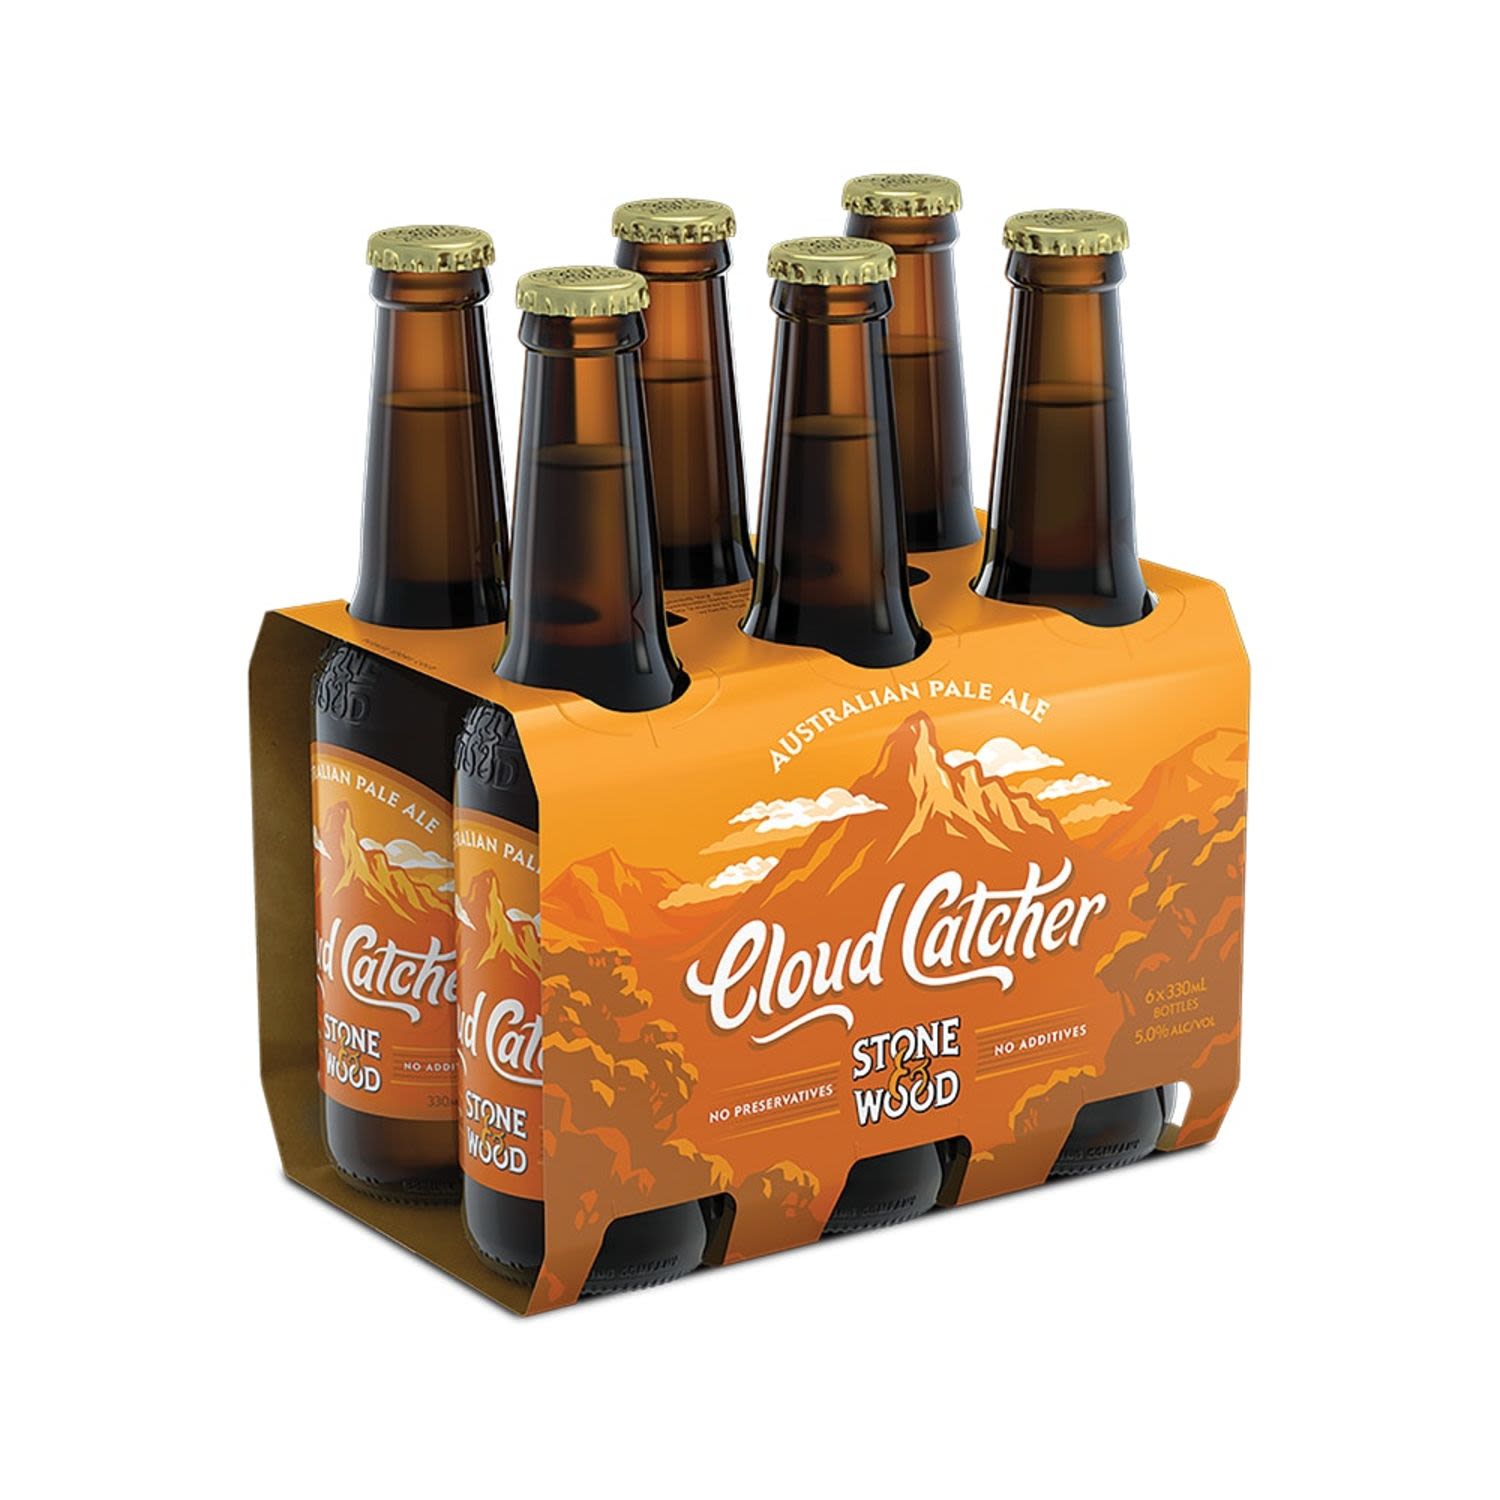 Stone & Wood Cloud Catcher Australian Pale Ale Bottle 330mL 6 Pack